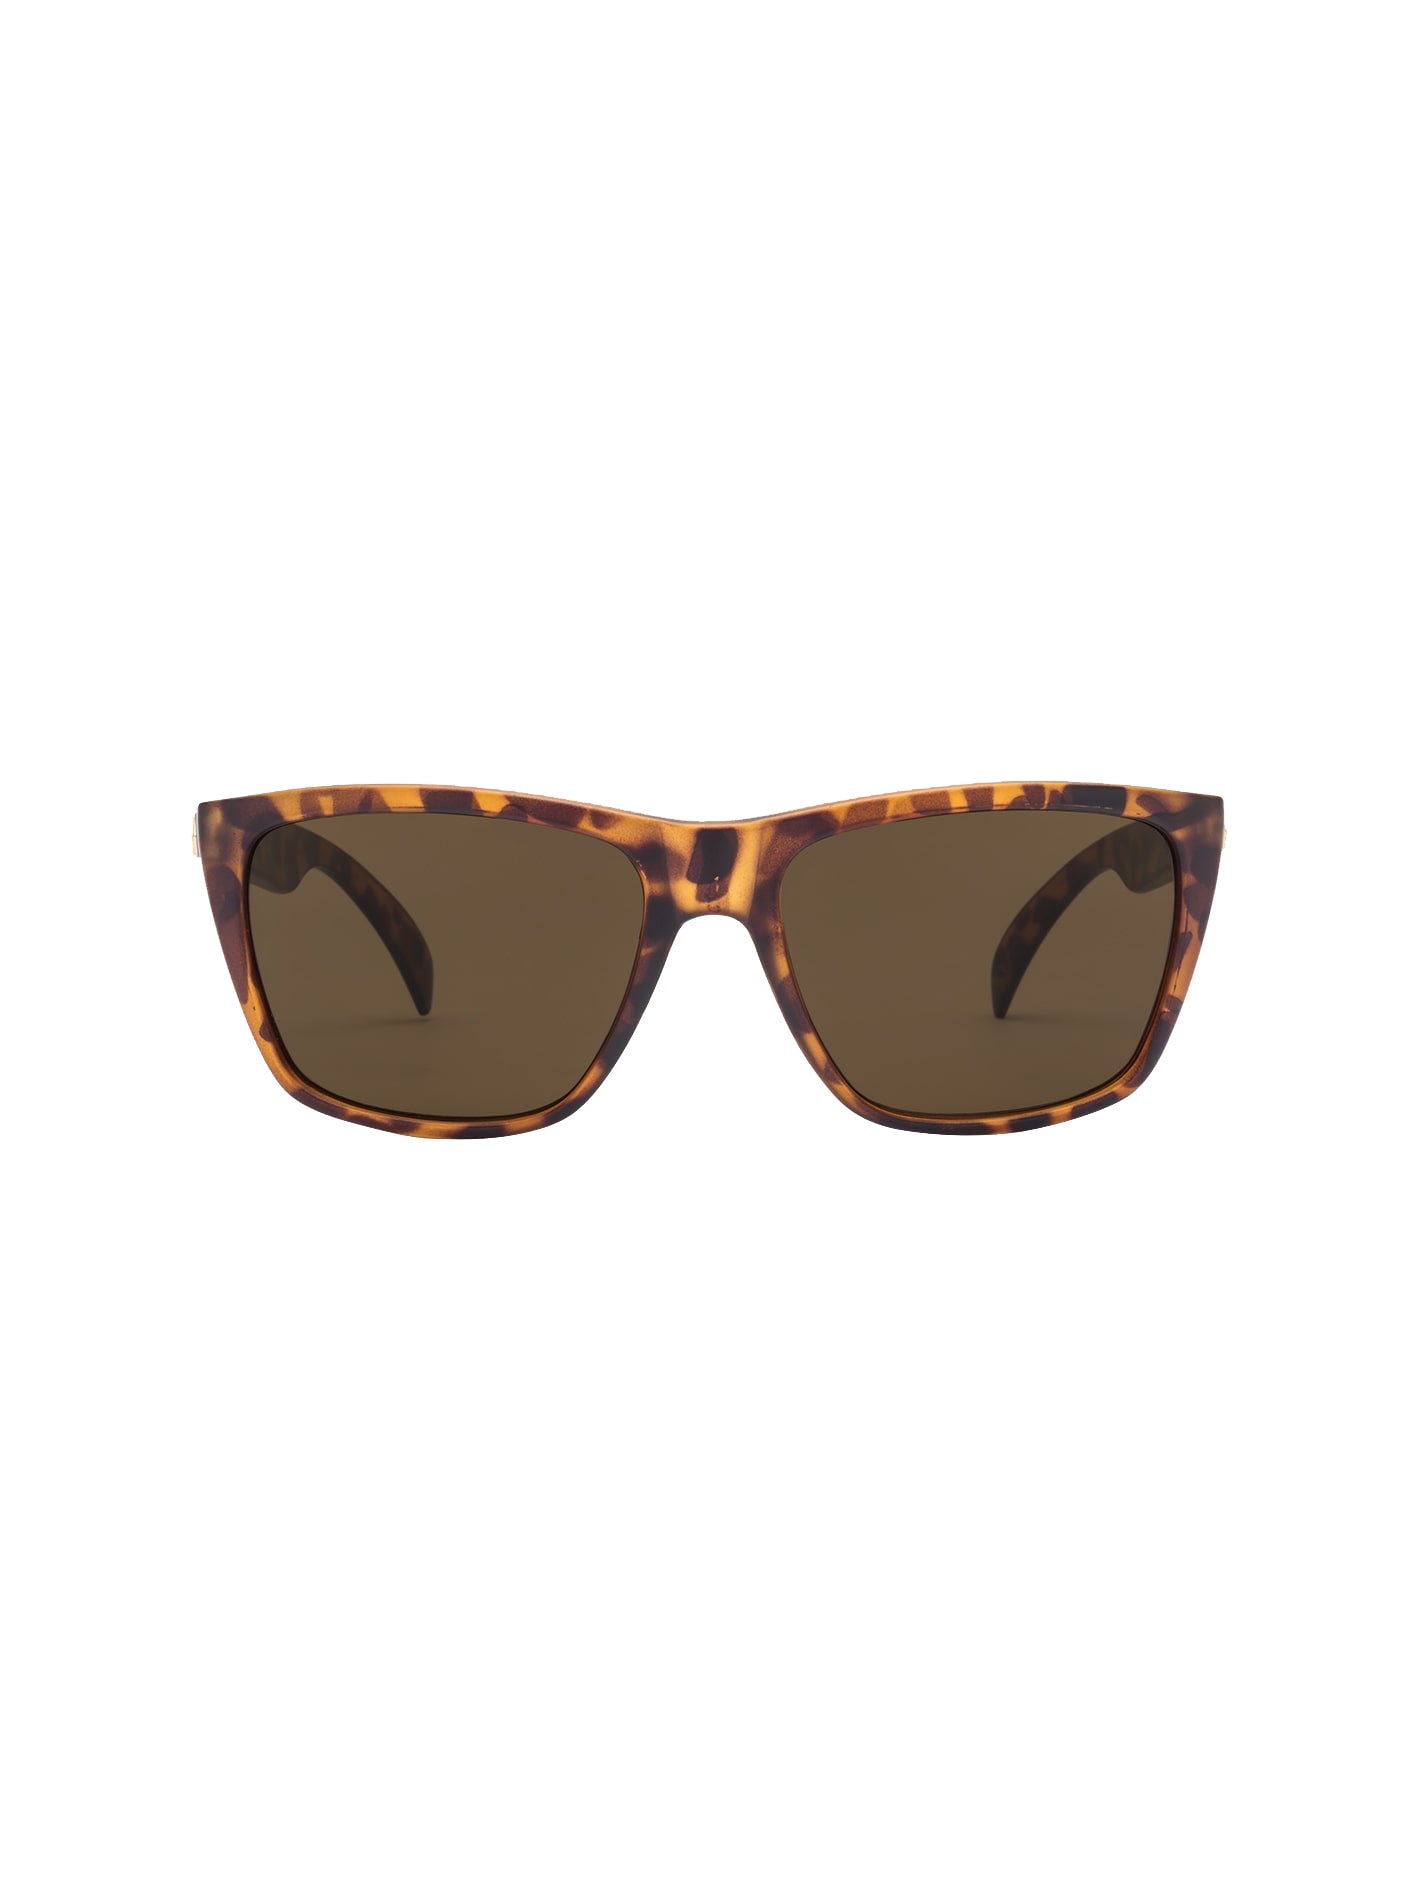 Volcom Plasm Sunglasses GlossSeaGrassTort Gray